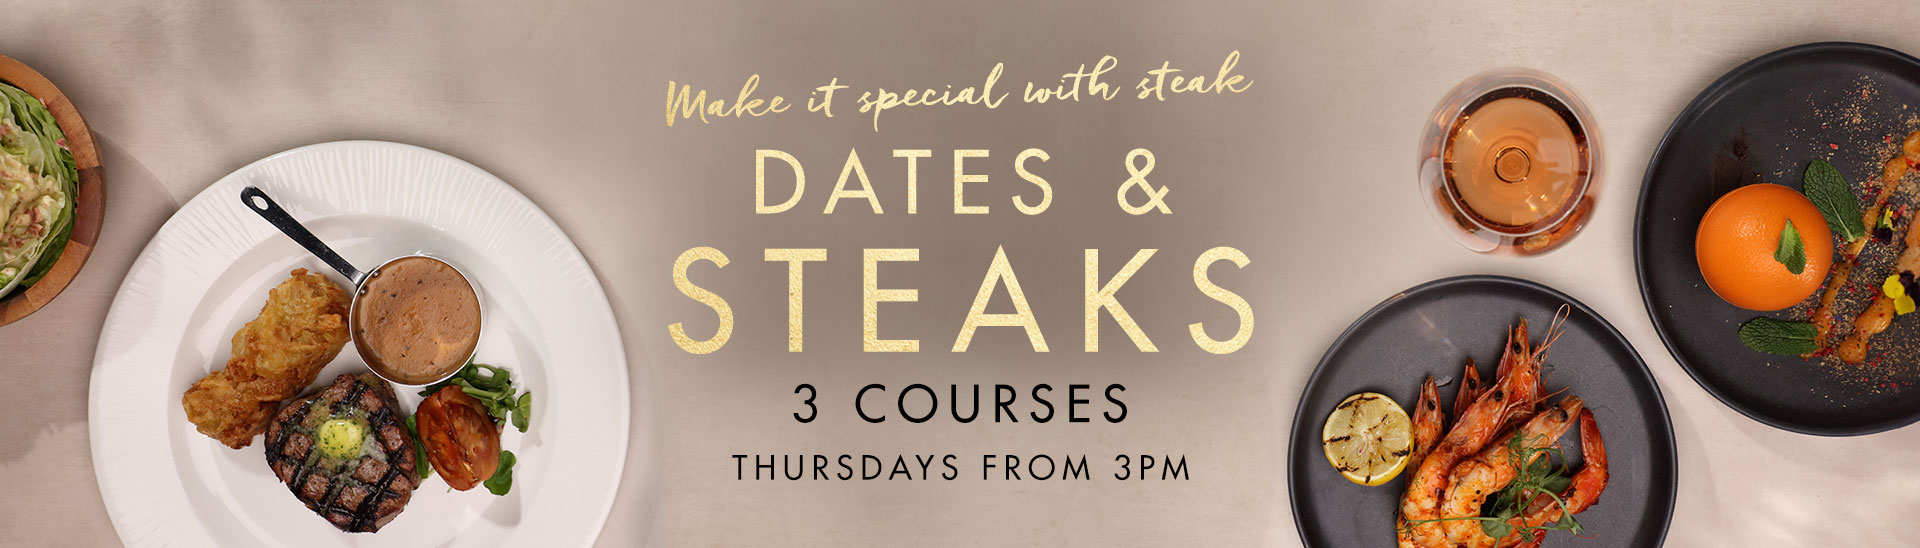 Dates & Steaks at Miller & Carter Chester